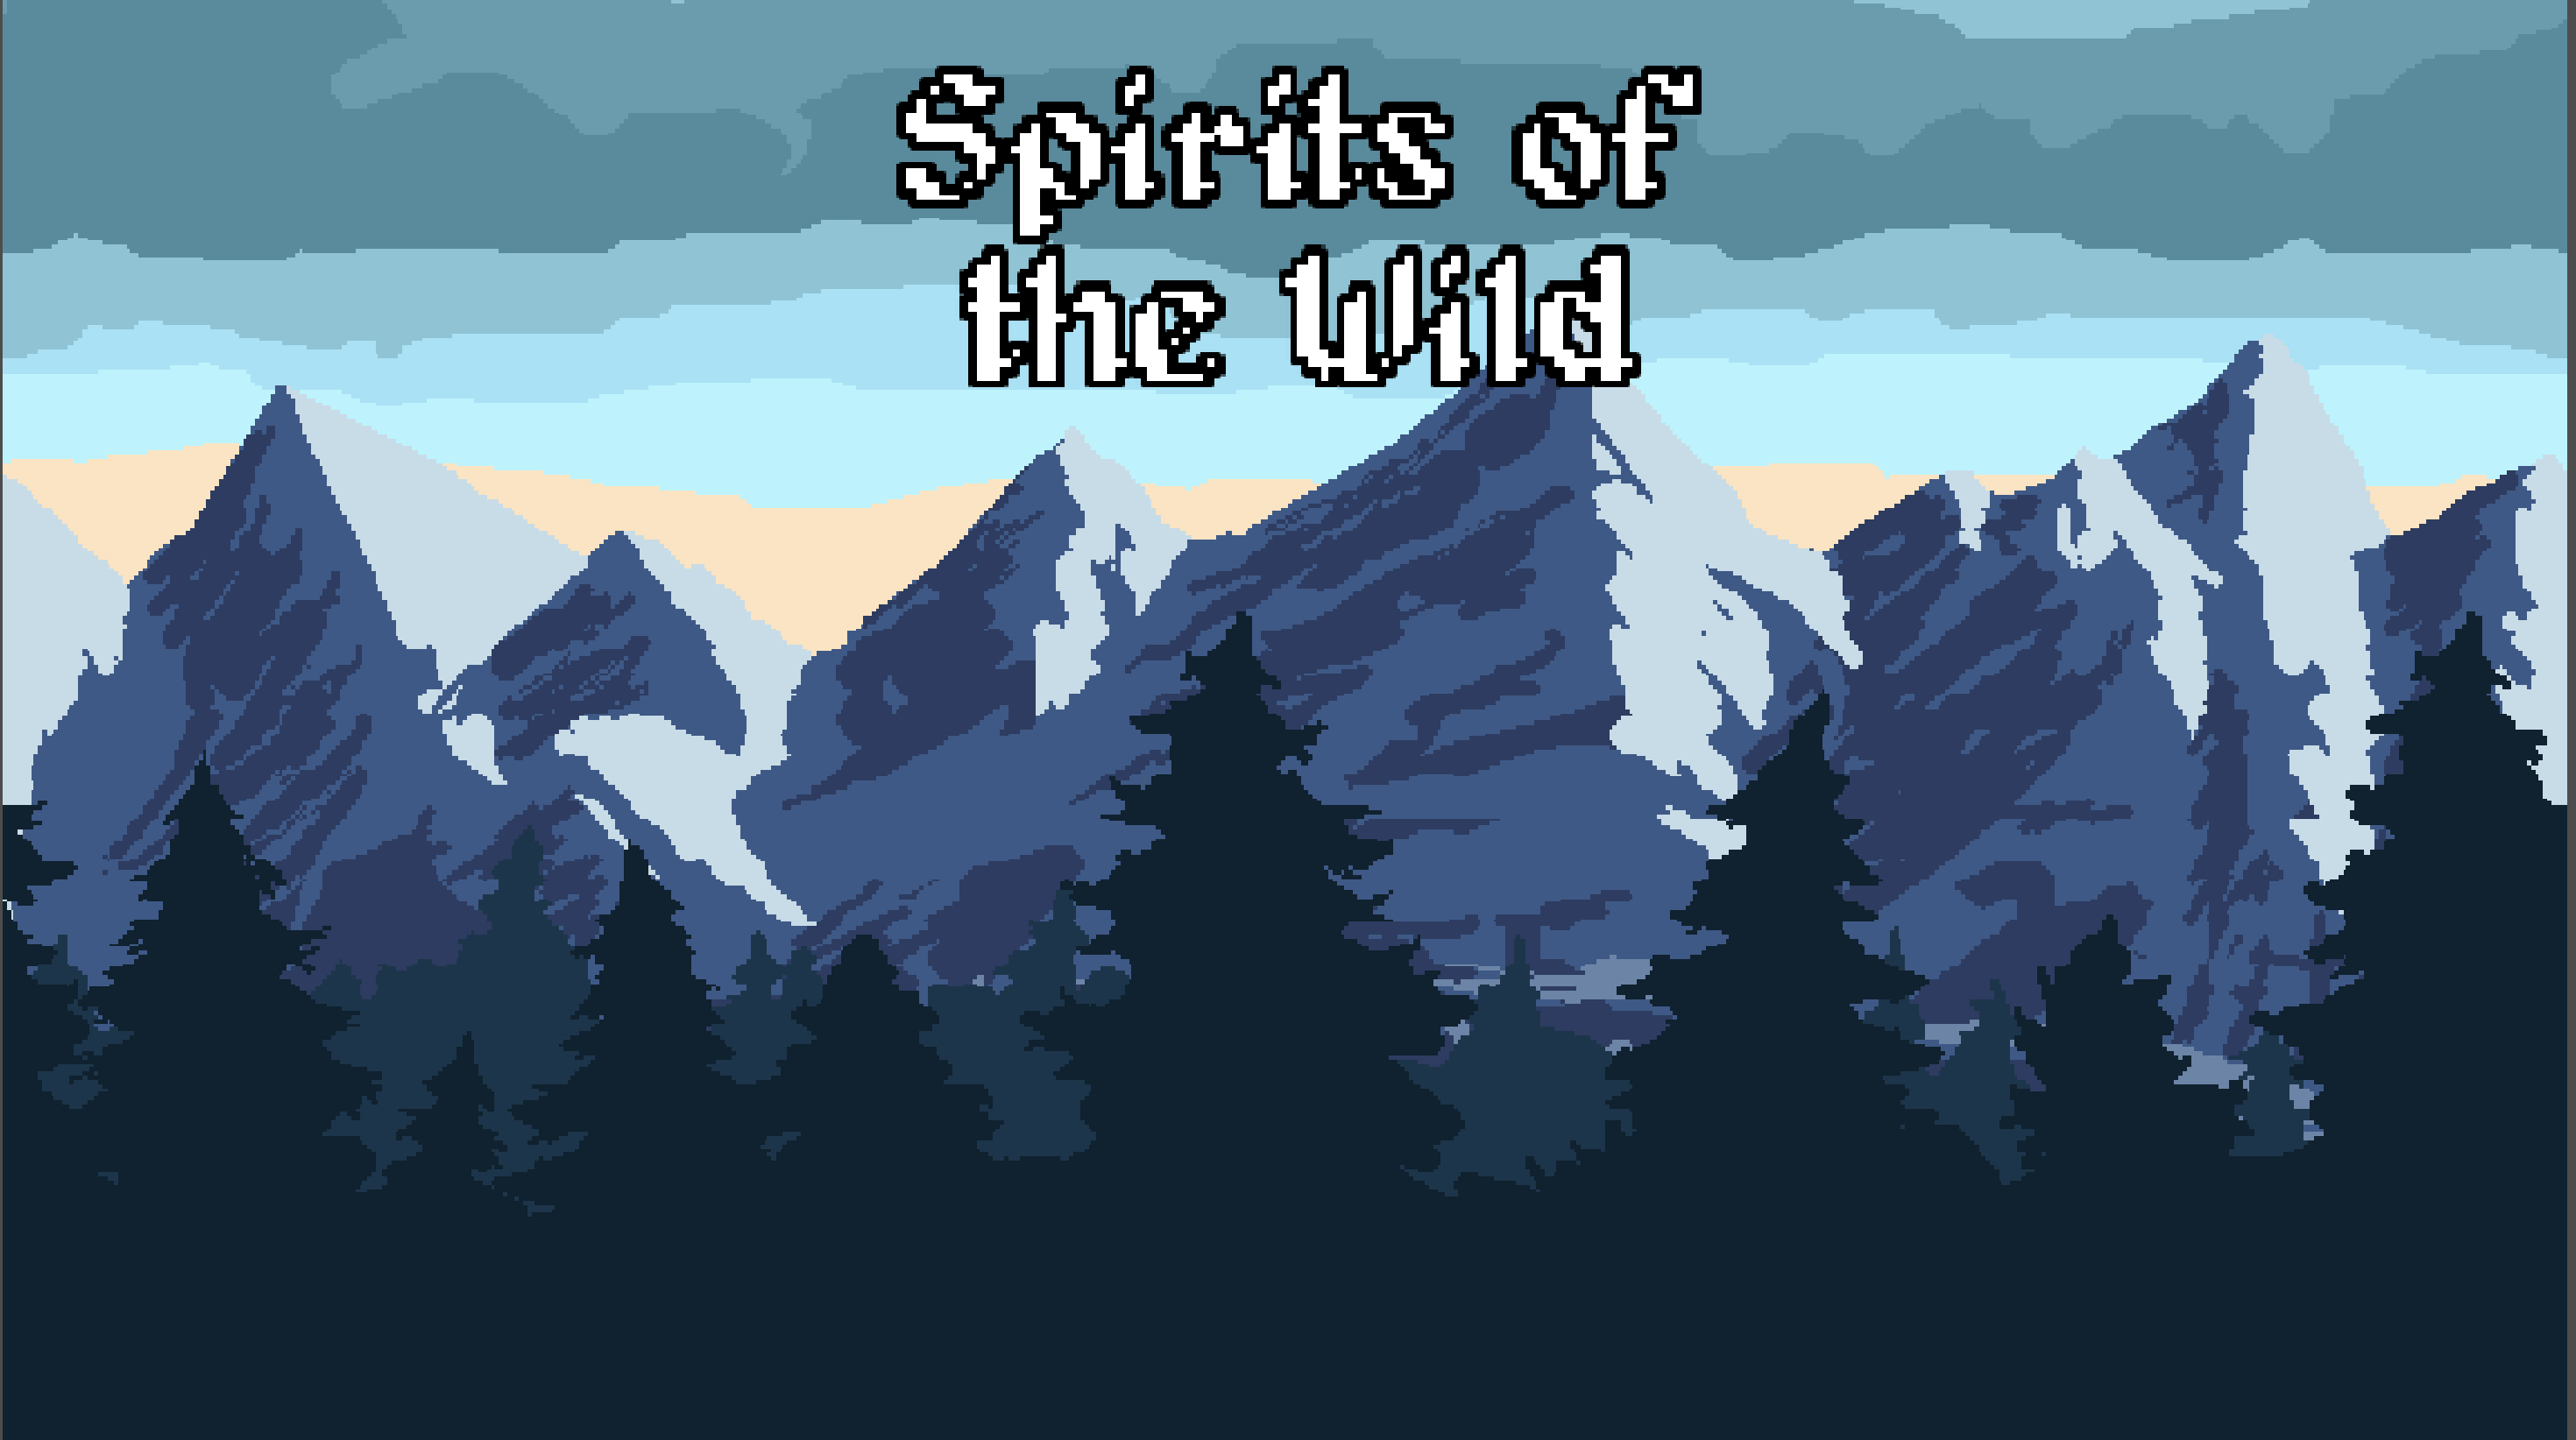 Spirits of the Wild